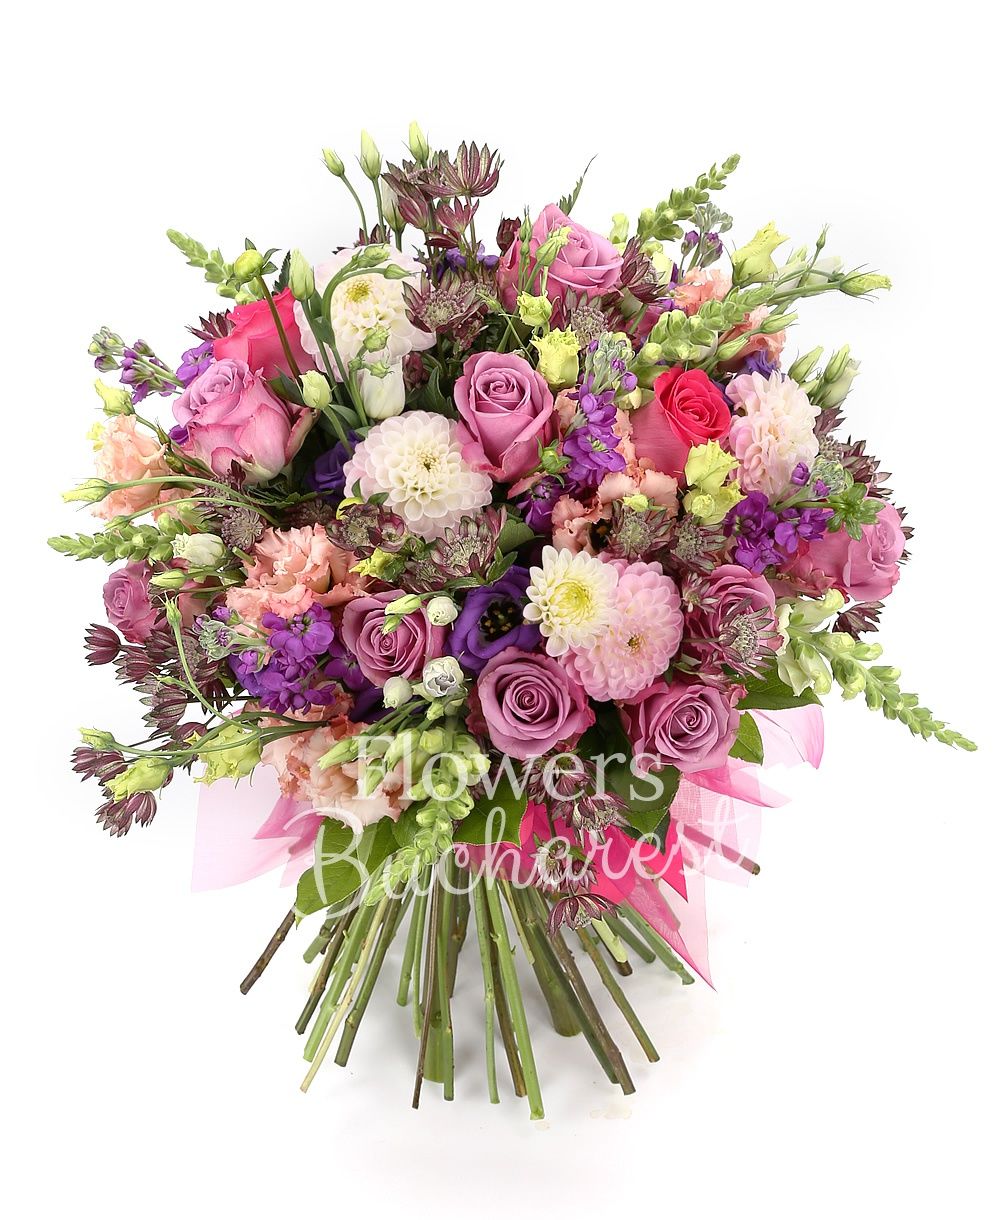 10 purple roses, 5 cyclam roses, 7 white anthurium , 5 purple matthiola, 7 purple astranția, 5 pink lisianthus, 5 purple lisianthus, 7 pink dahlias, greenery